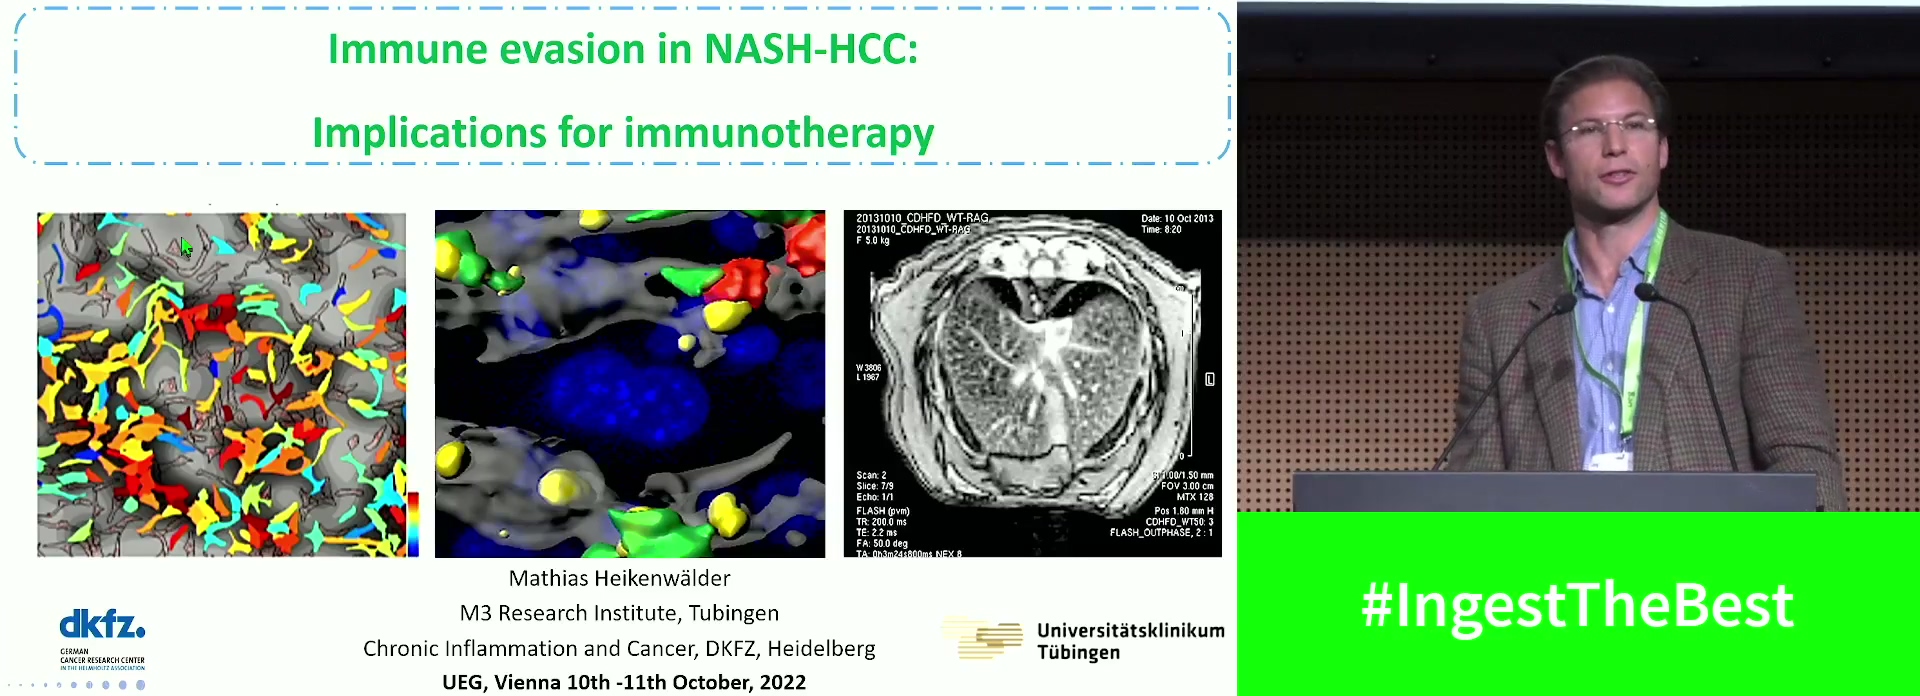 Immunevasion in NASH-HCC